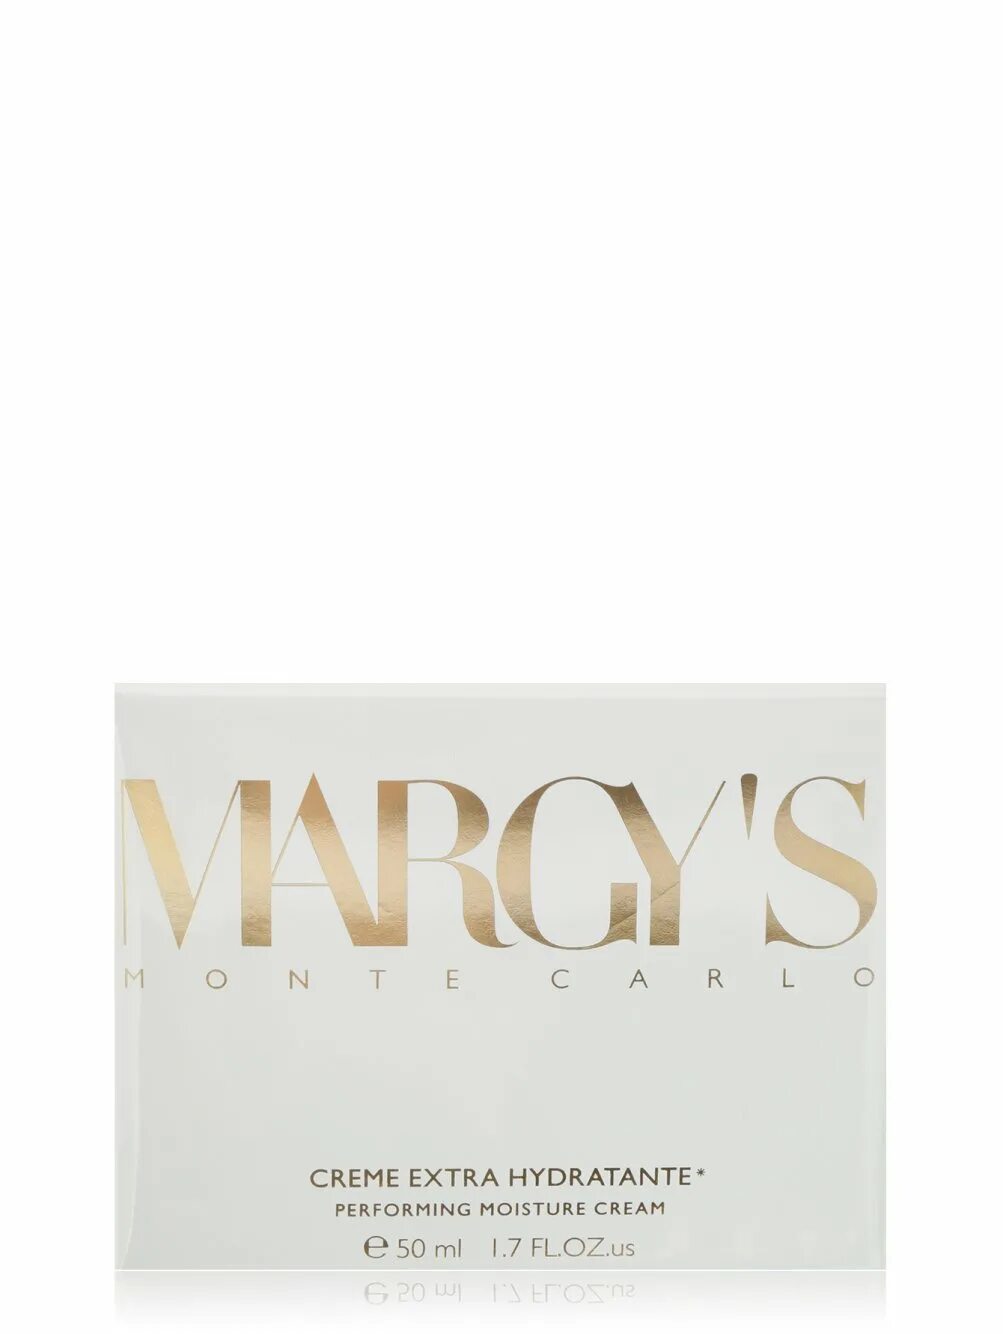 Margys маска Monte Carlo. Маска Margy's. Margys маска для лица. Крем Margy's. Margys